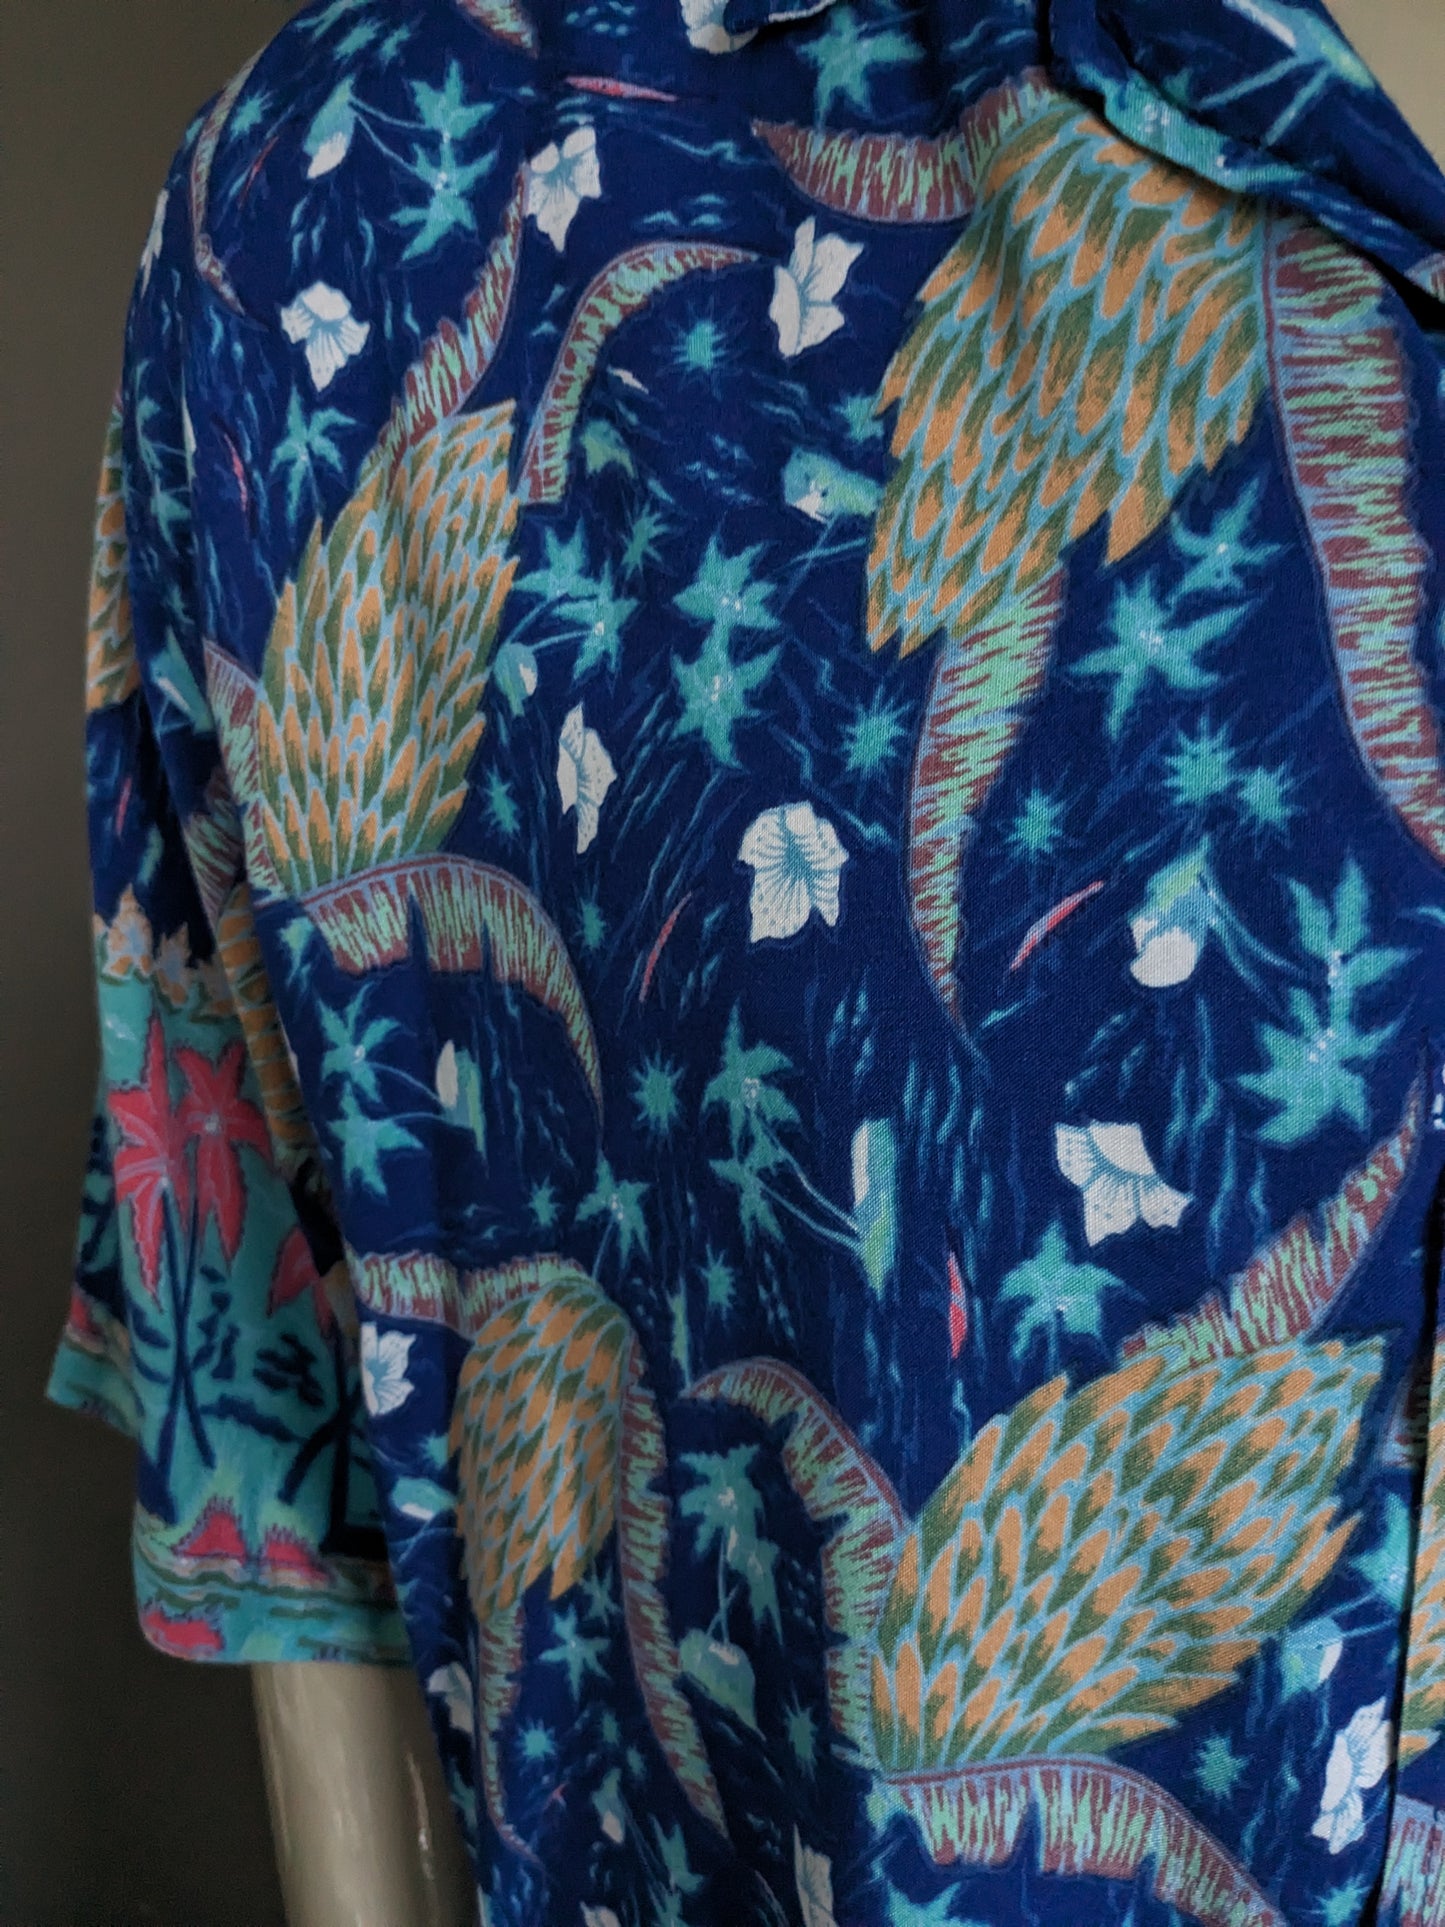 Rainbow Jo maui original Hawaii shirt short sleeve. Blue orange pink green print. Size XL.